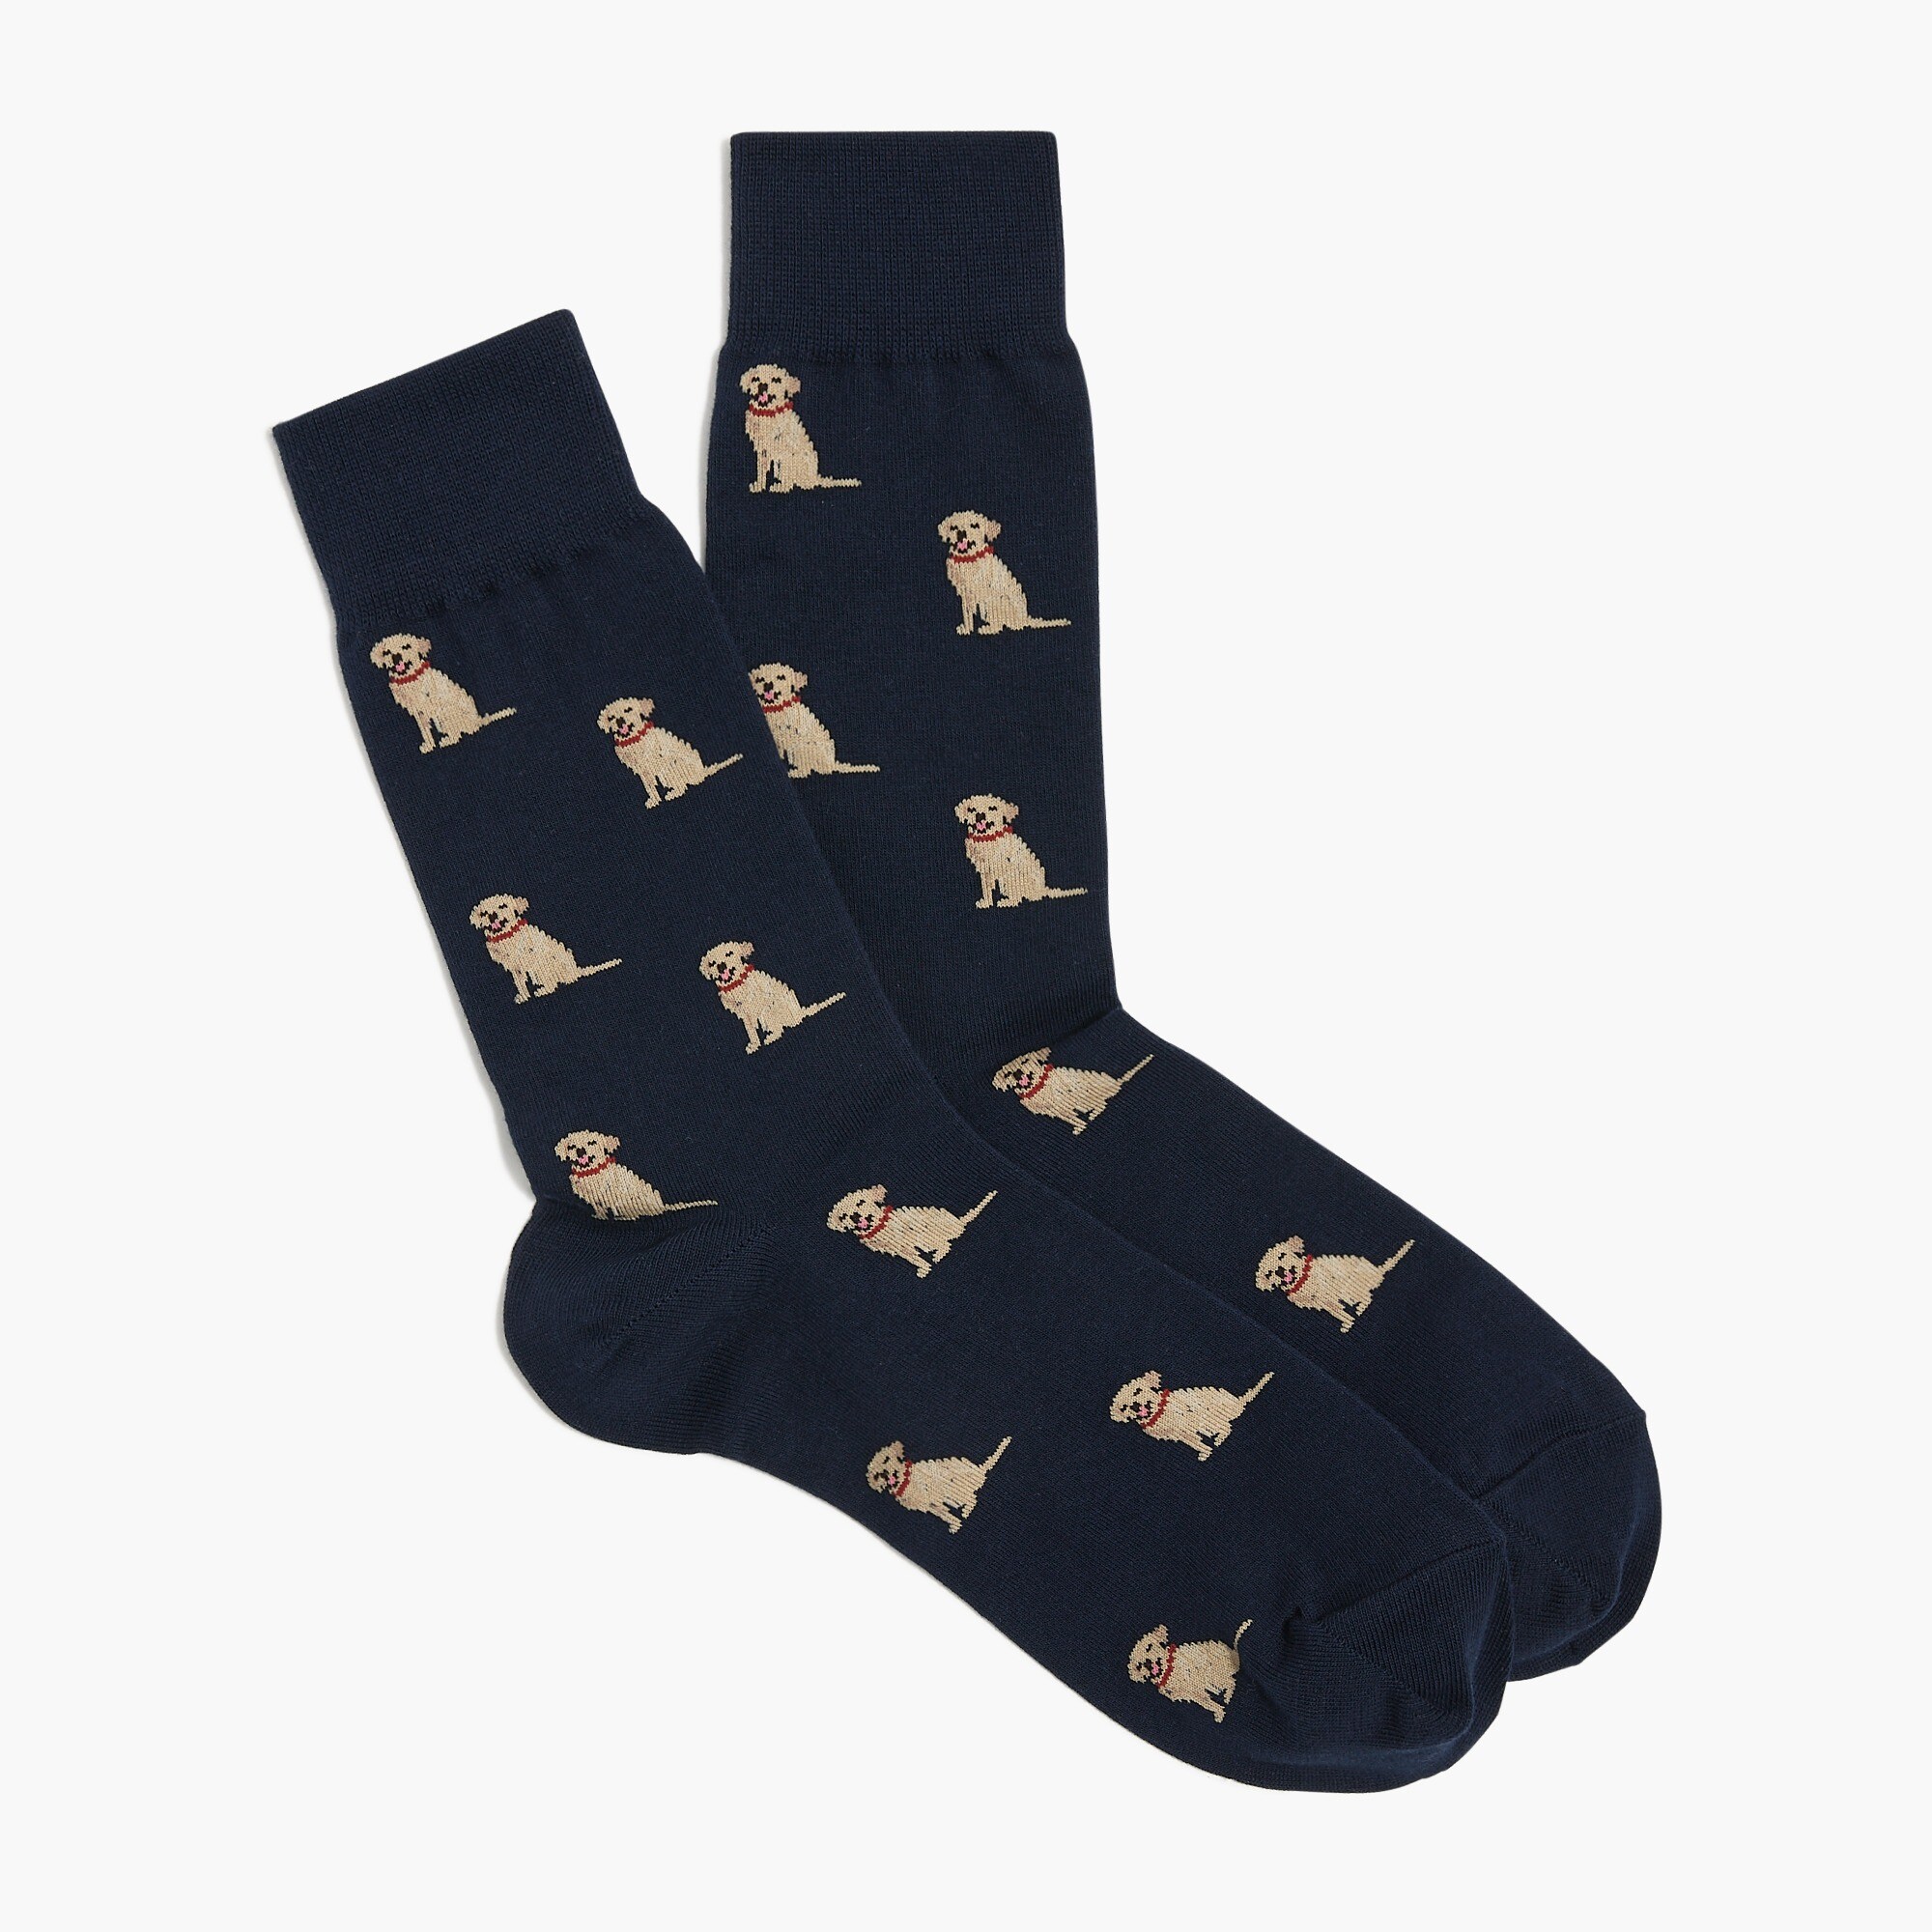  Dog socks